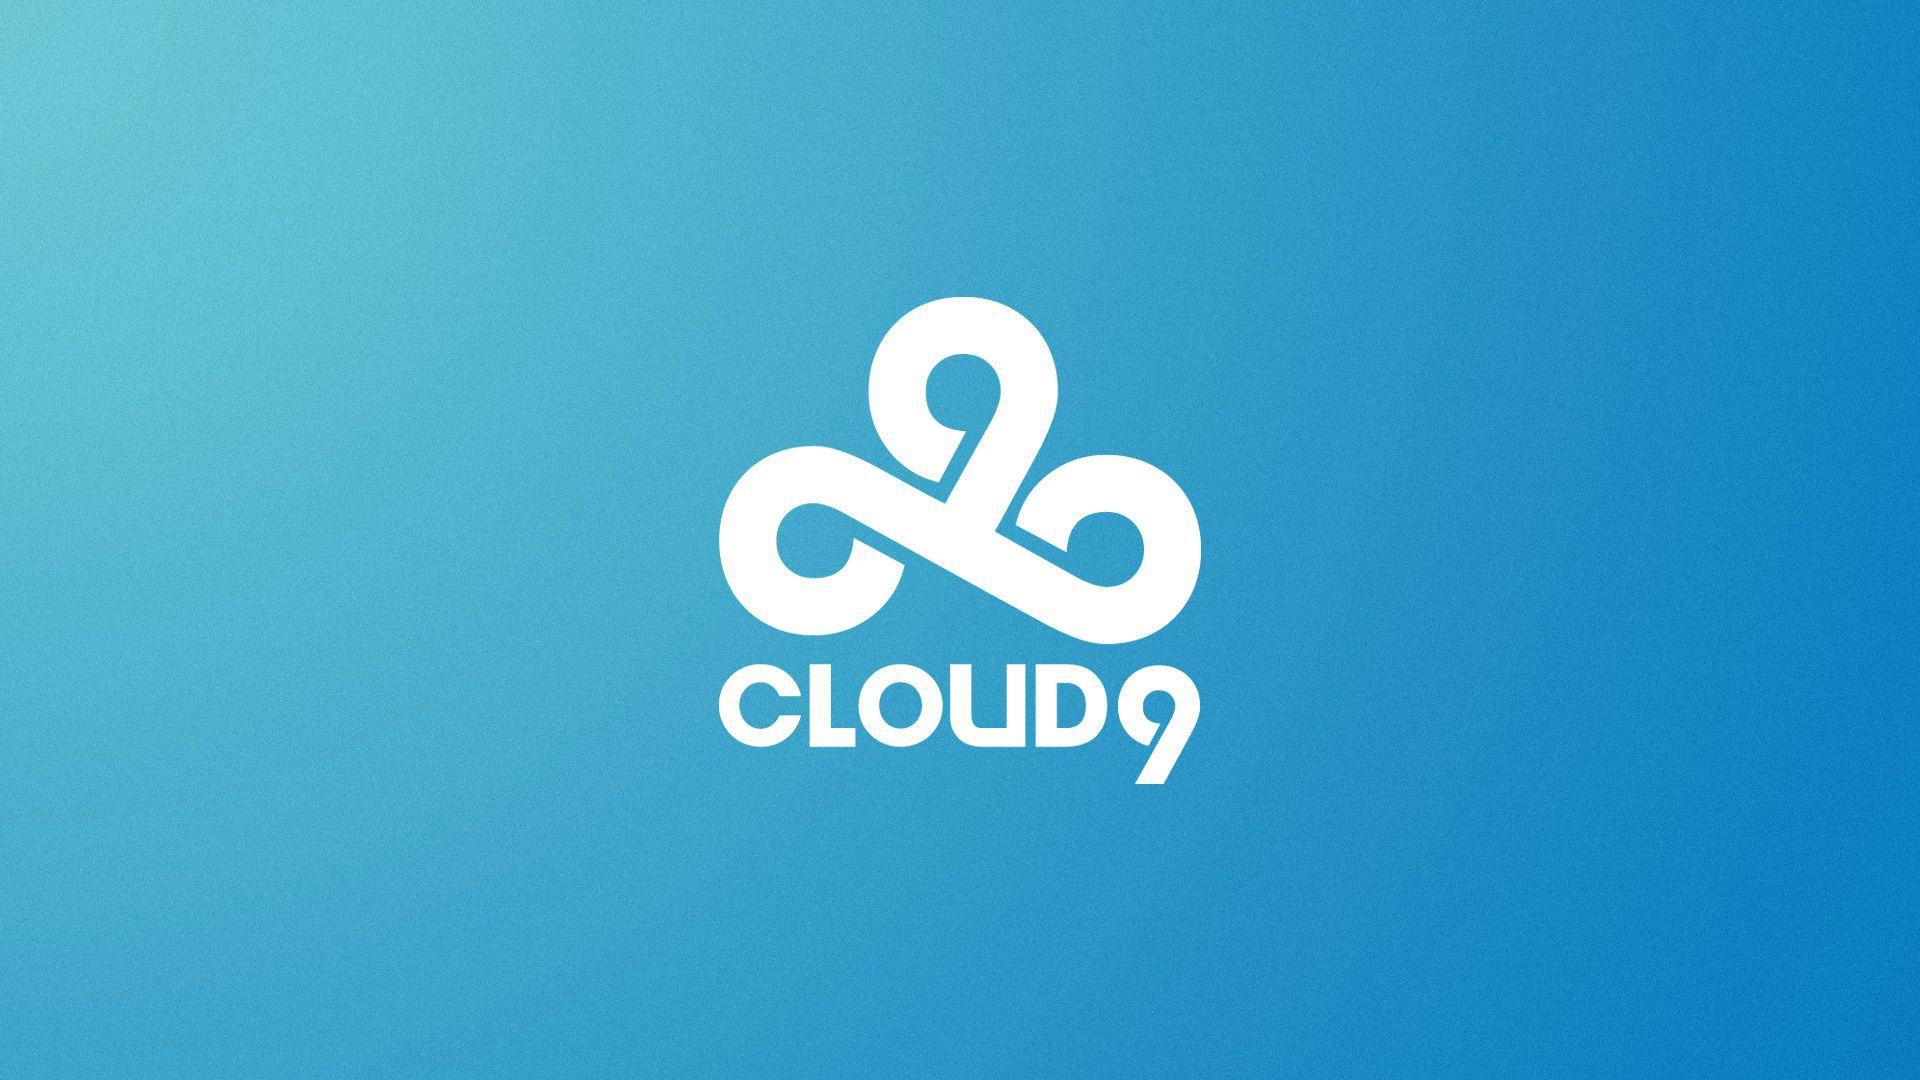 Cloud 9 Logo - Cloud9 Wallpaper